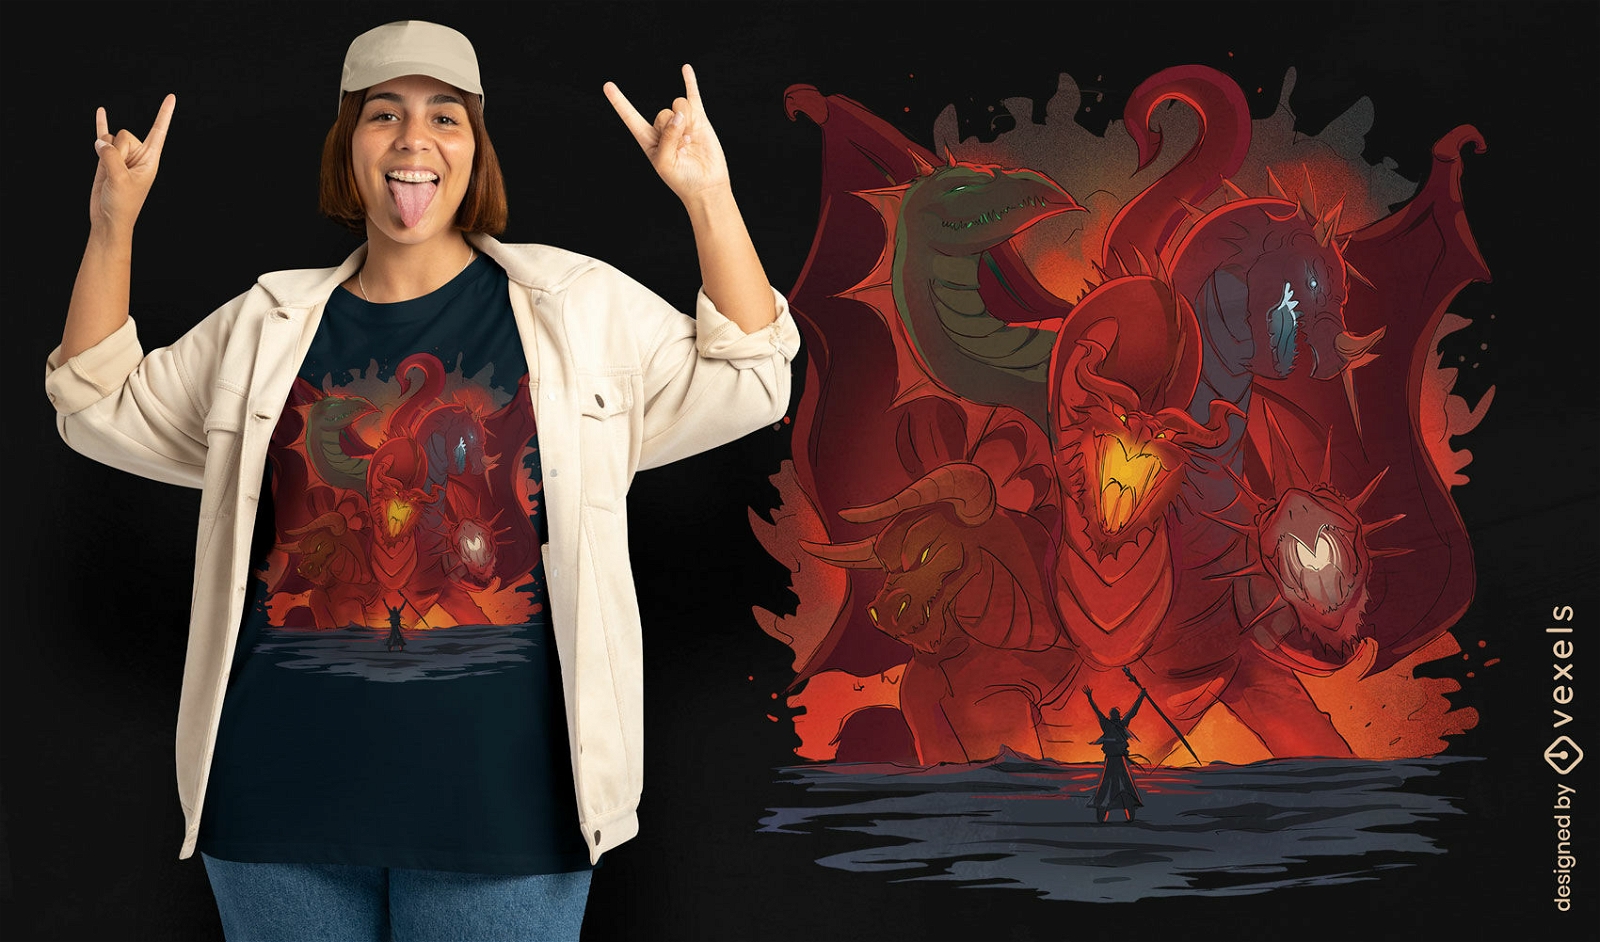 Five head dragon fantasy t-shirt design